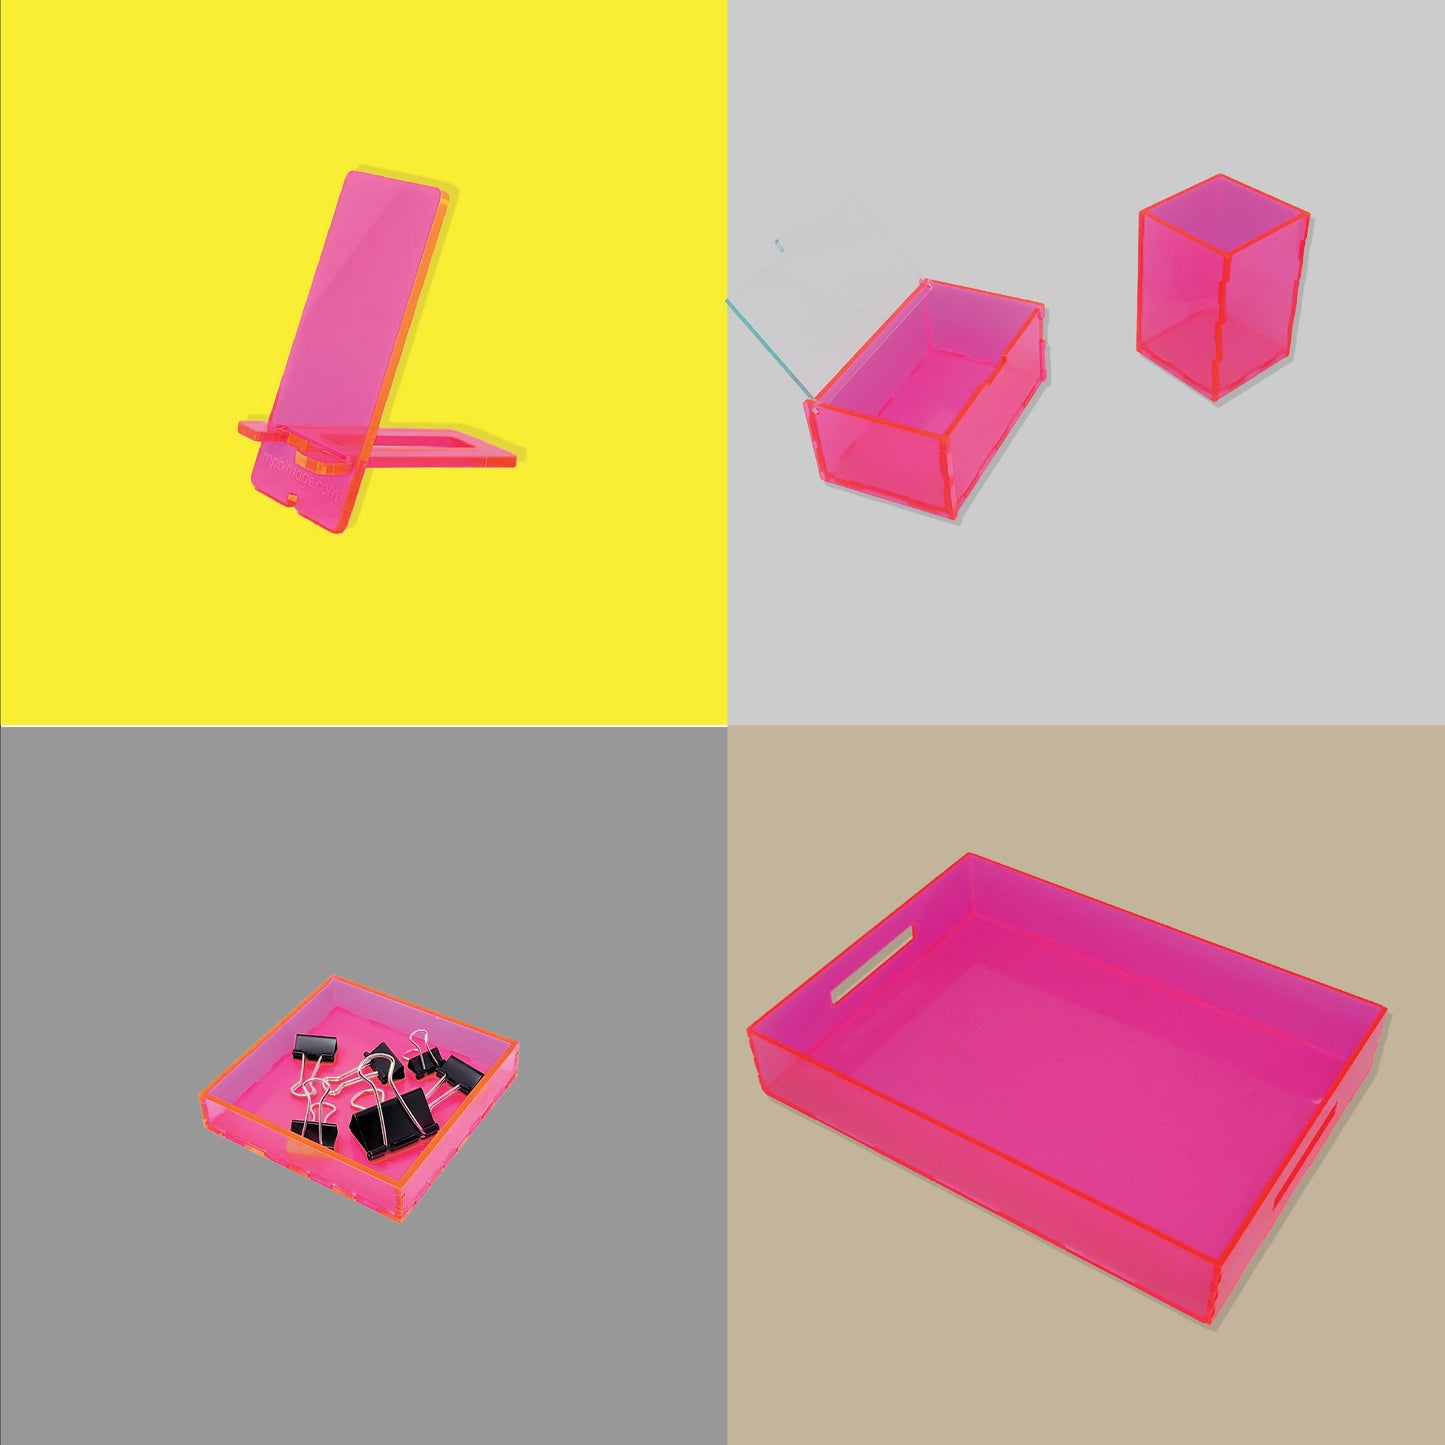 Pink Desk Setup Box